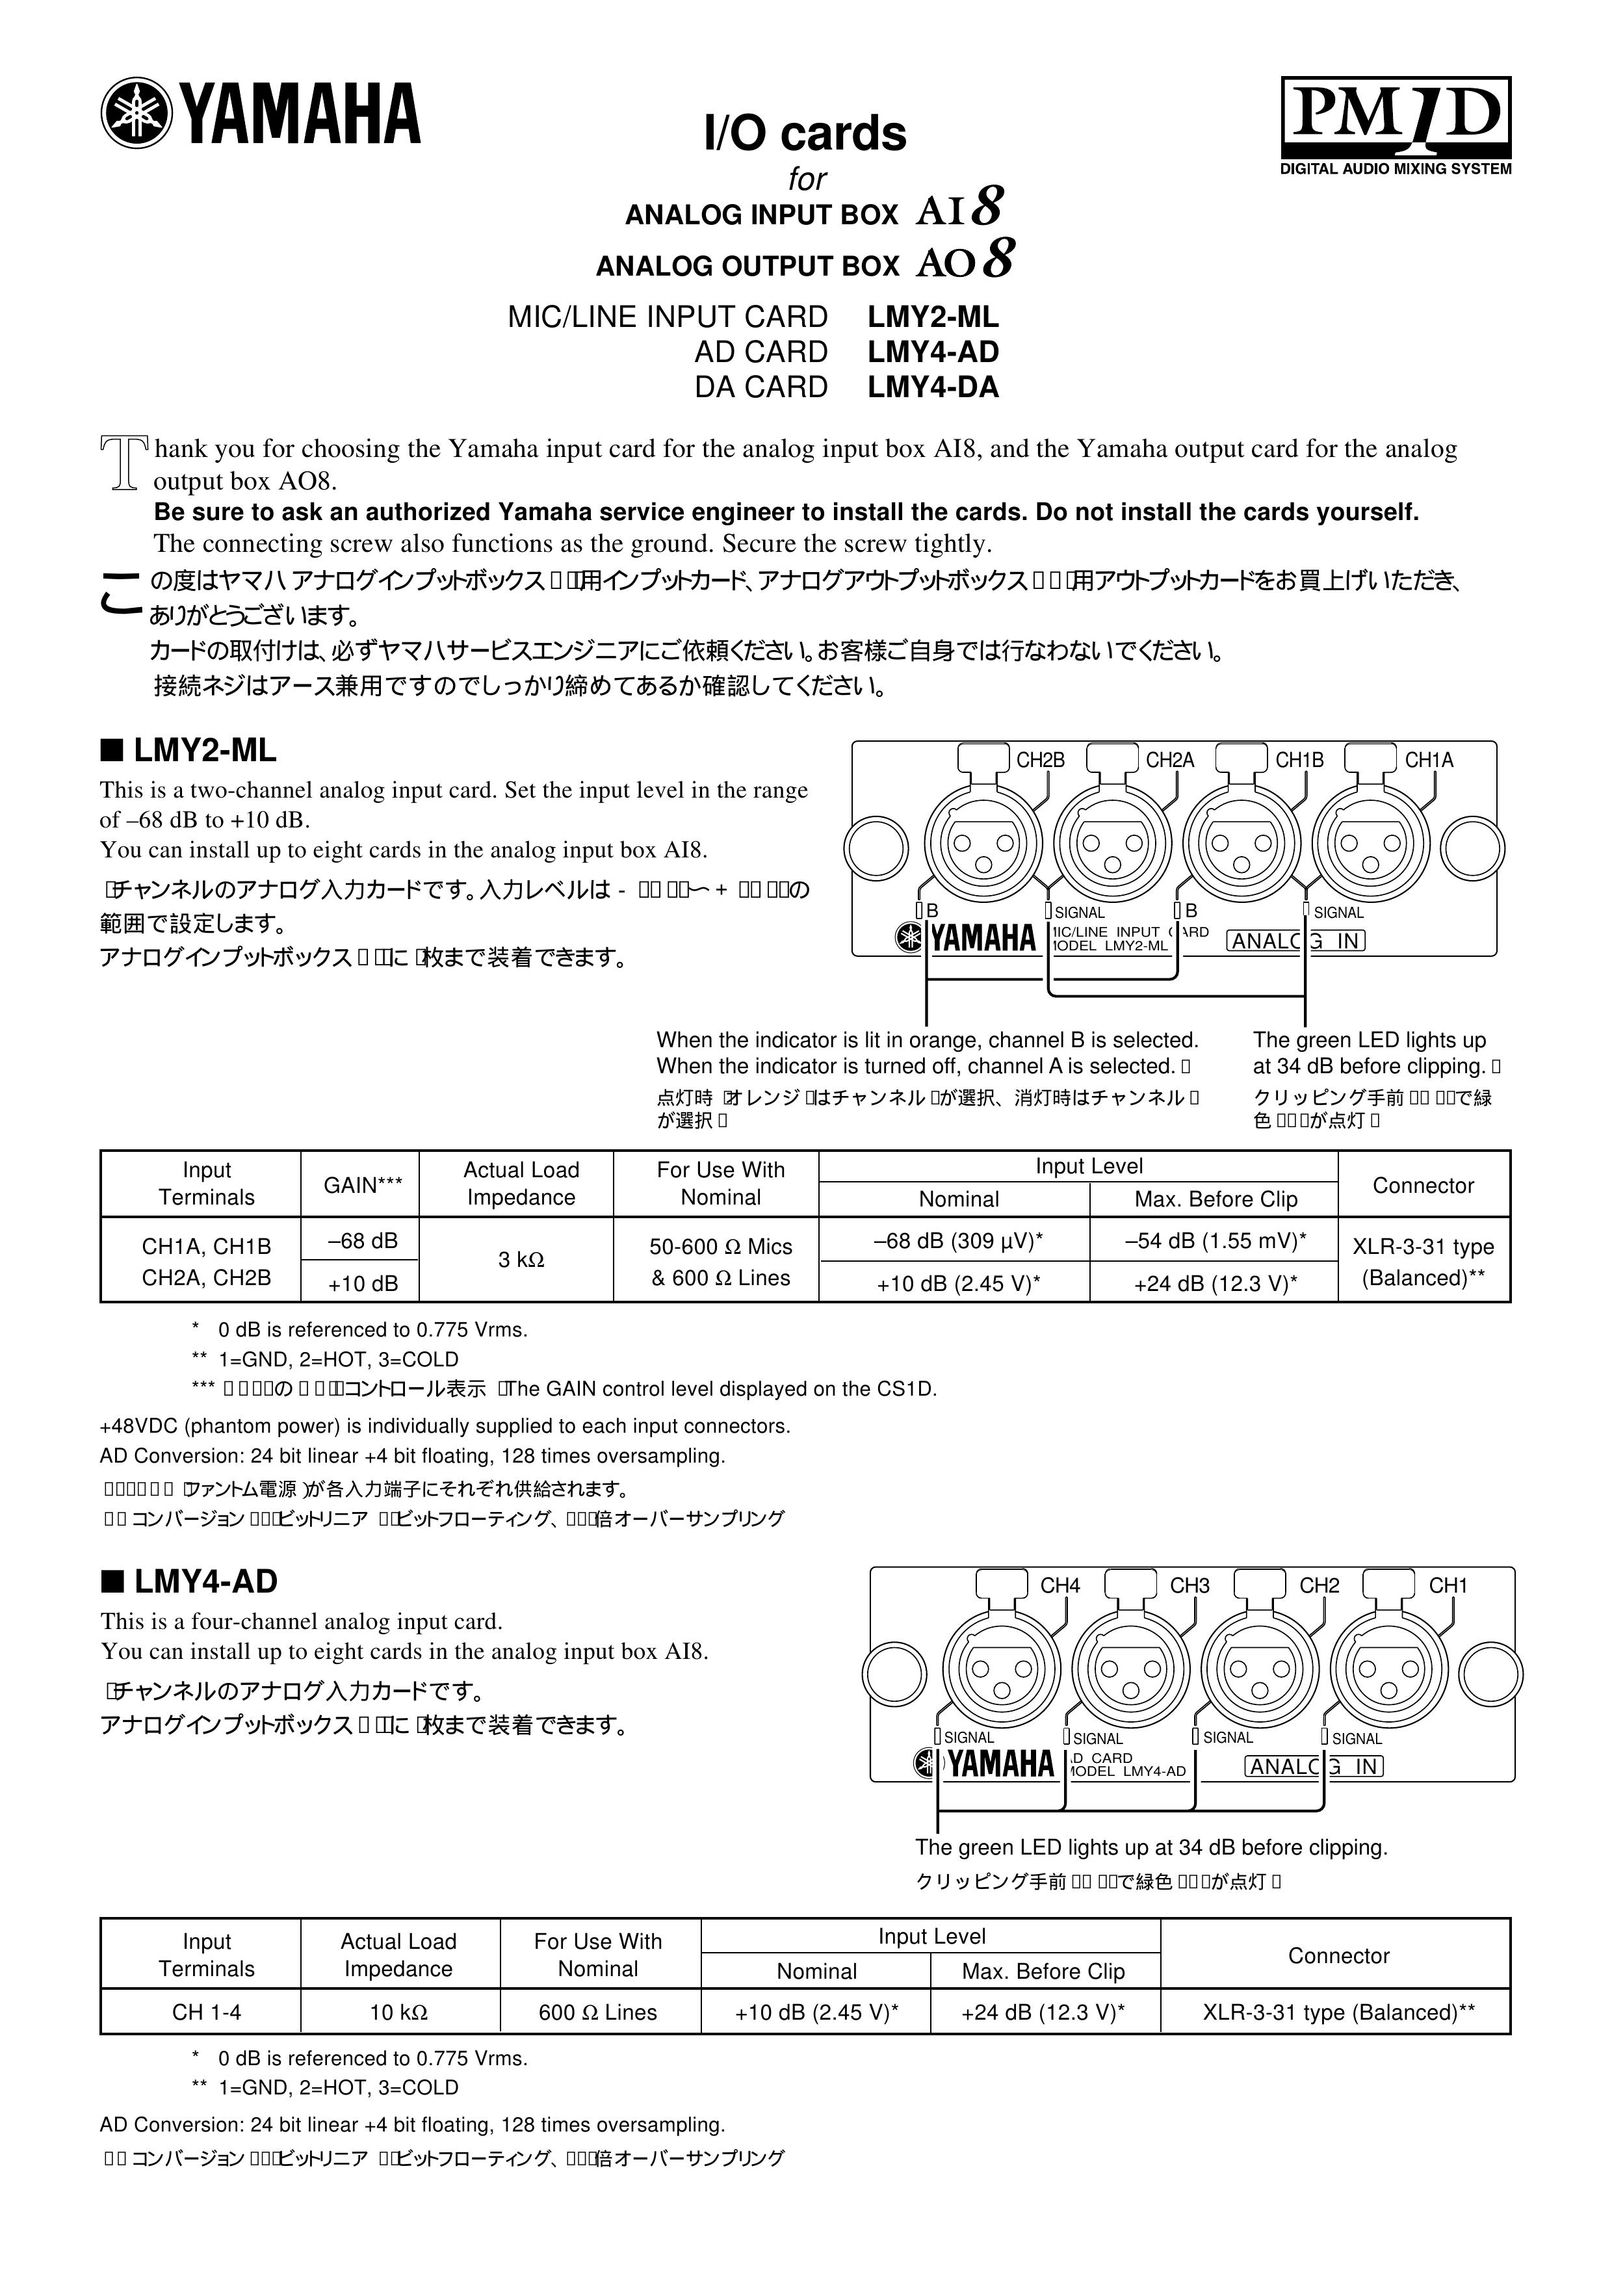 Yamaha LMY2-ML Computer Drive User Manual